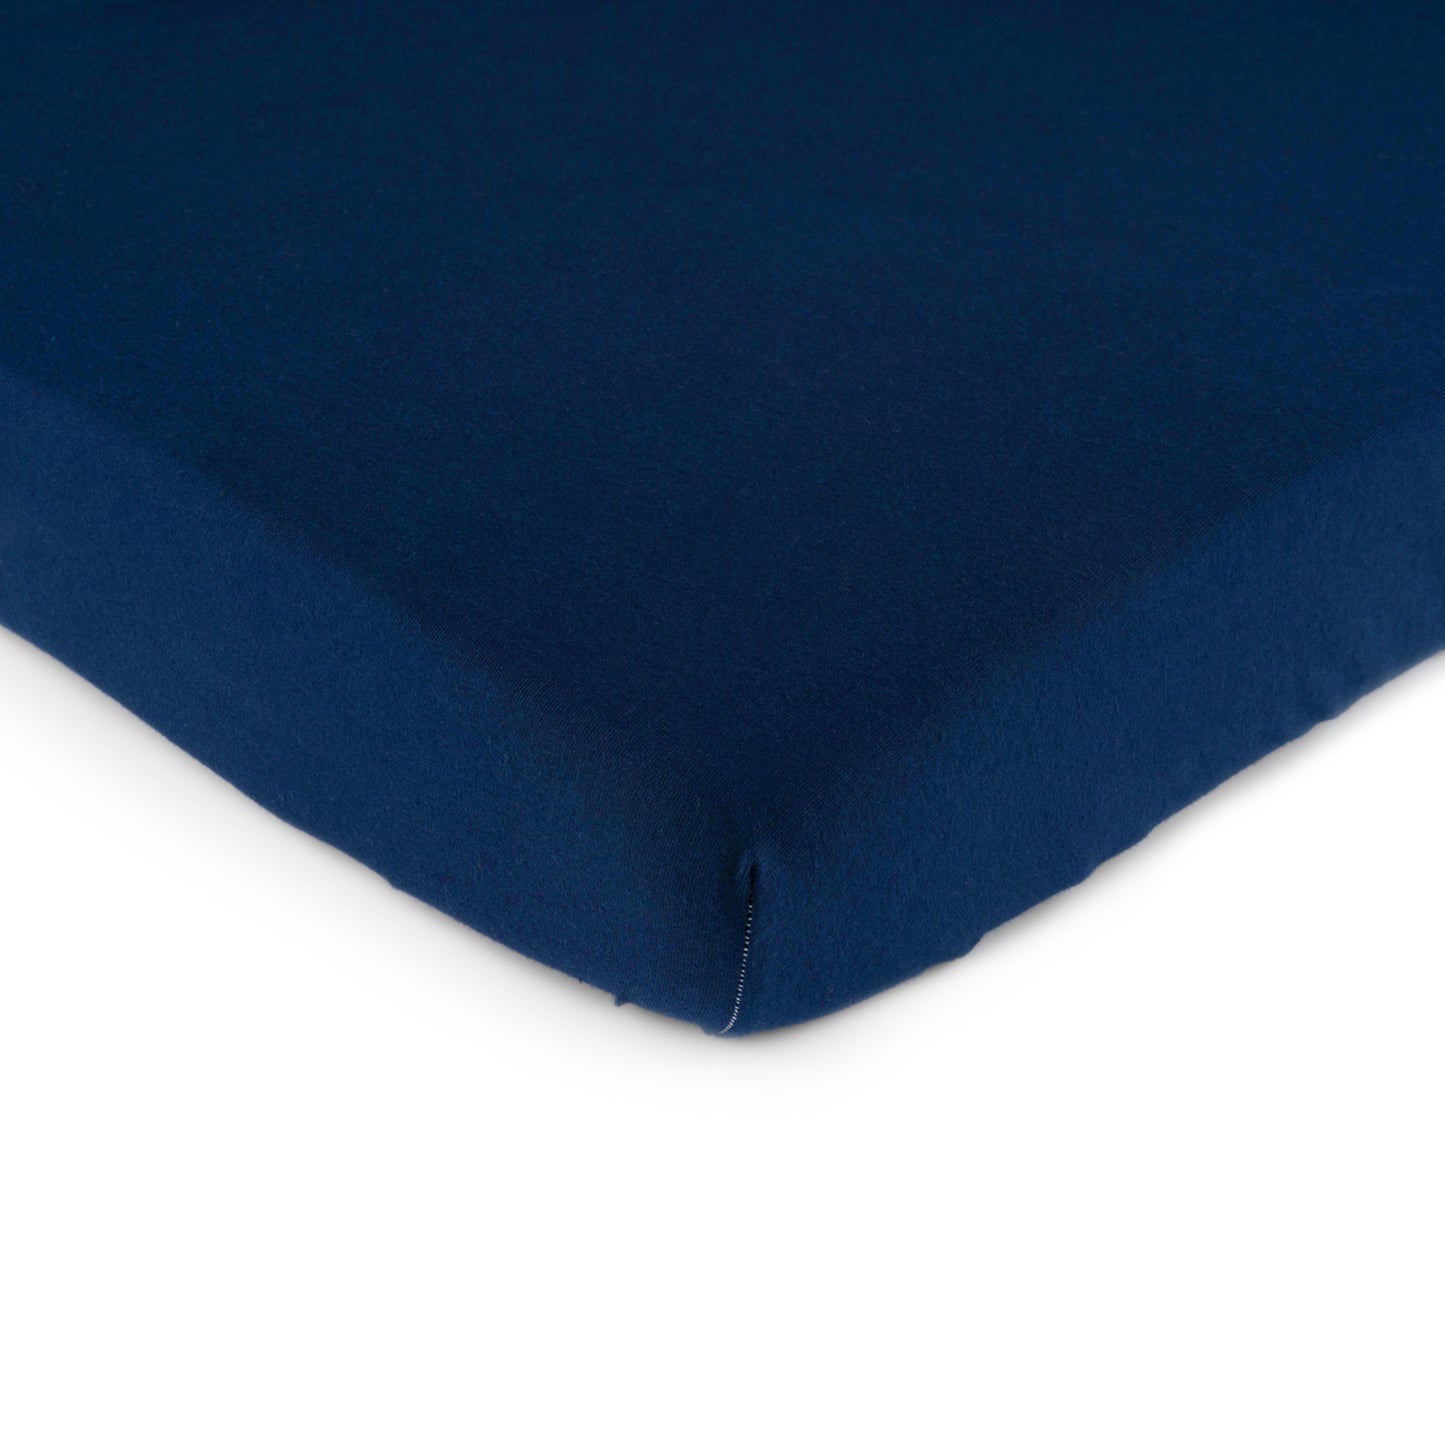 SheetWorld Fitted Bassinet Sheet Fits Nuna Mixx - 100% Cotton Jersey -